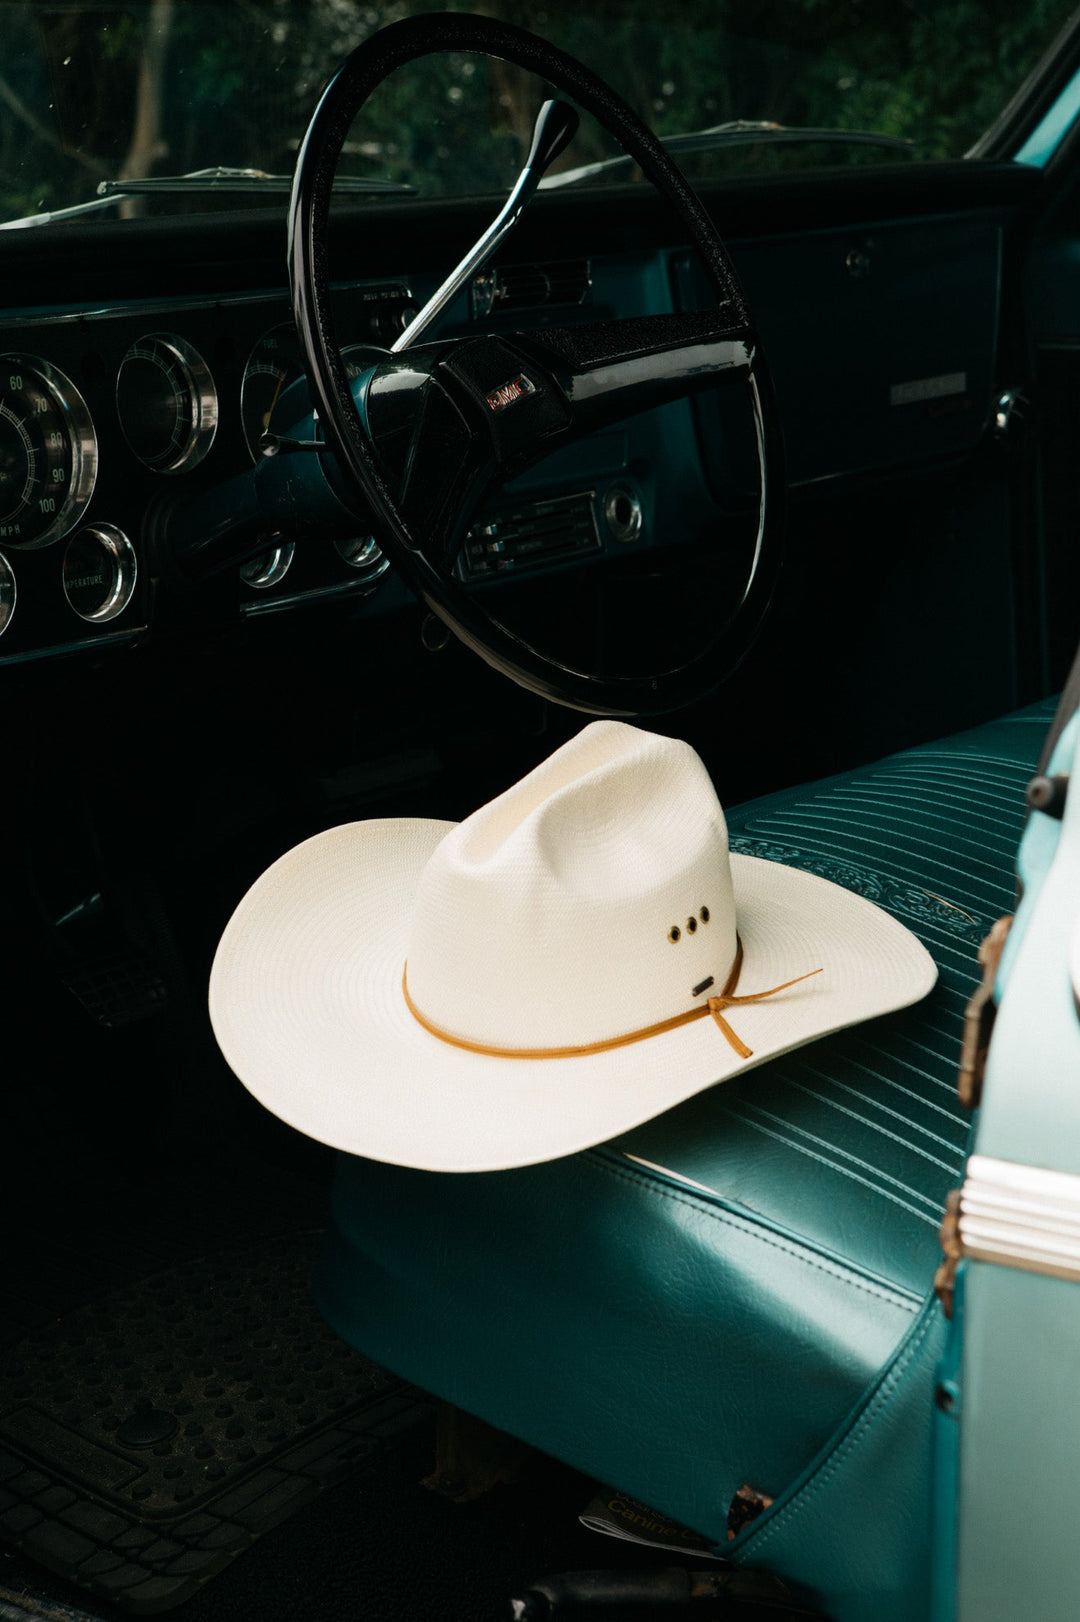 El Paso Straw Reserve Cowboy Hat - Off White - Sun Diego Boardshop